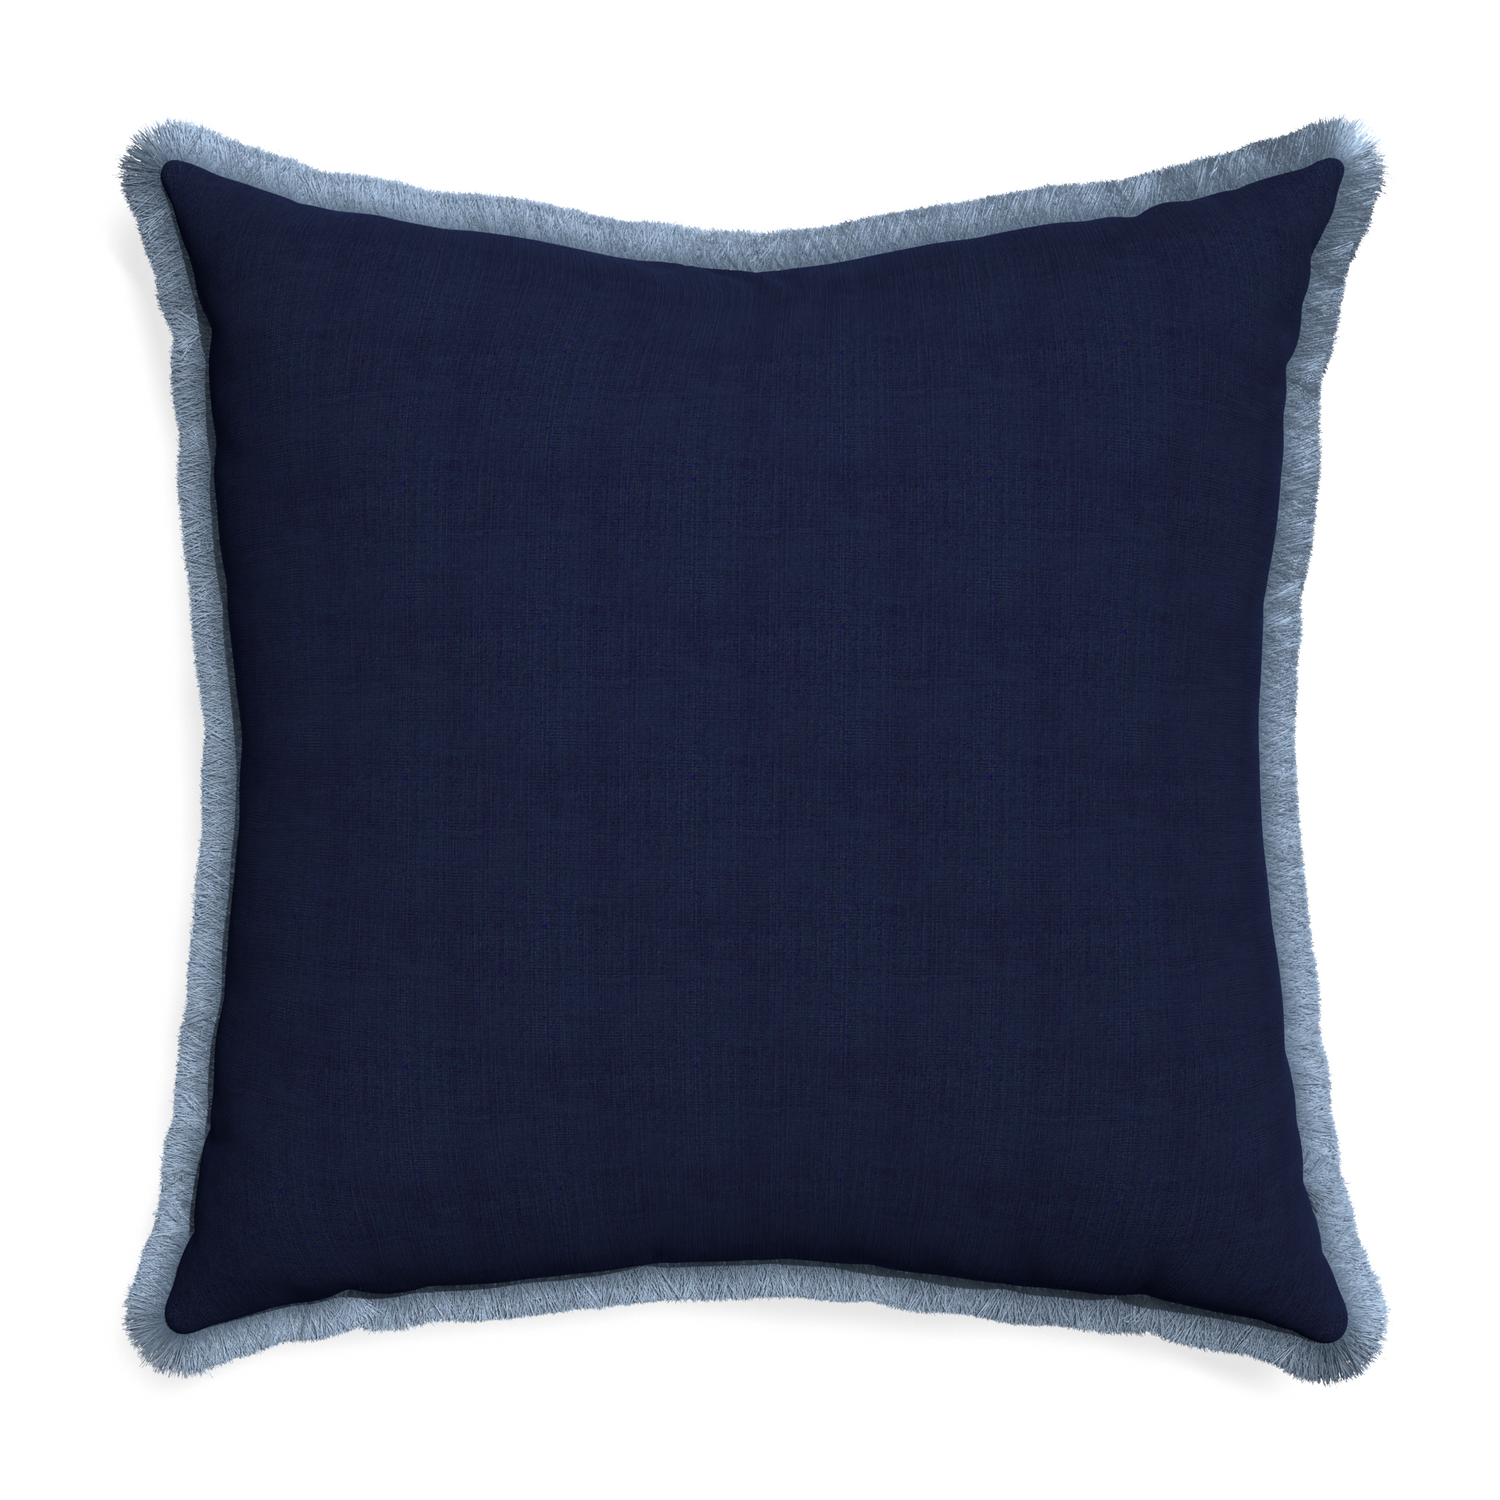 Euro-sham midnight custom pillow with sky fringe on white background